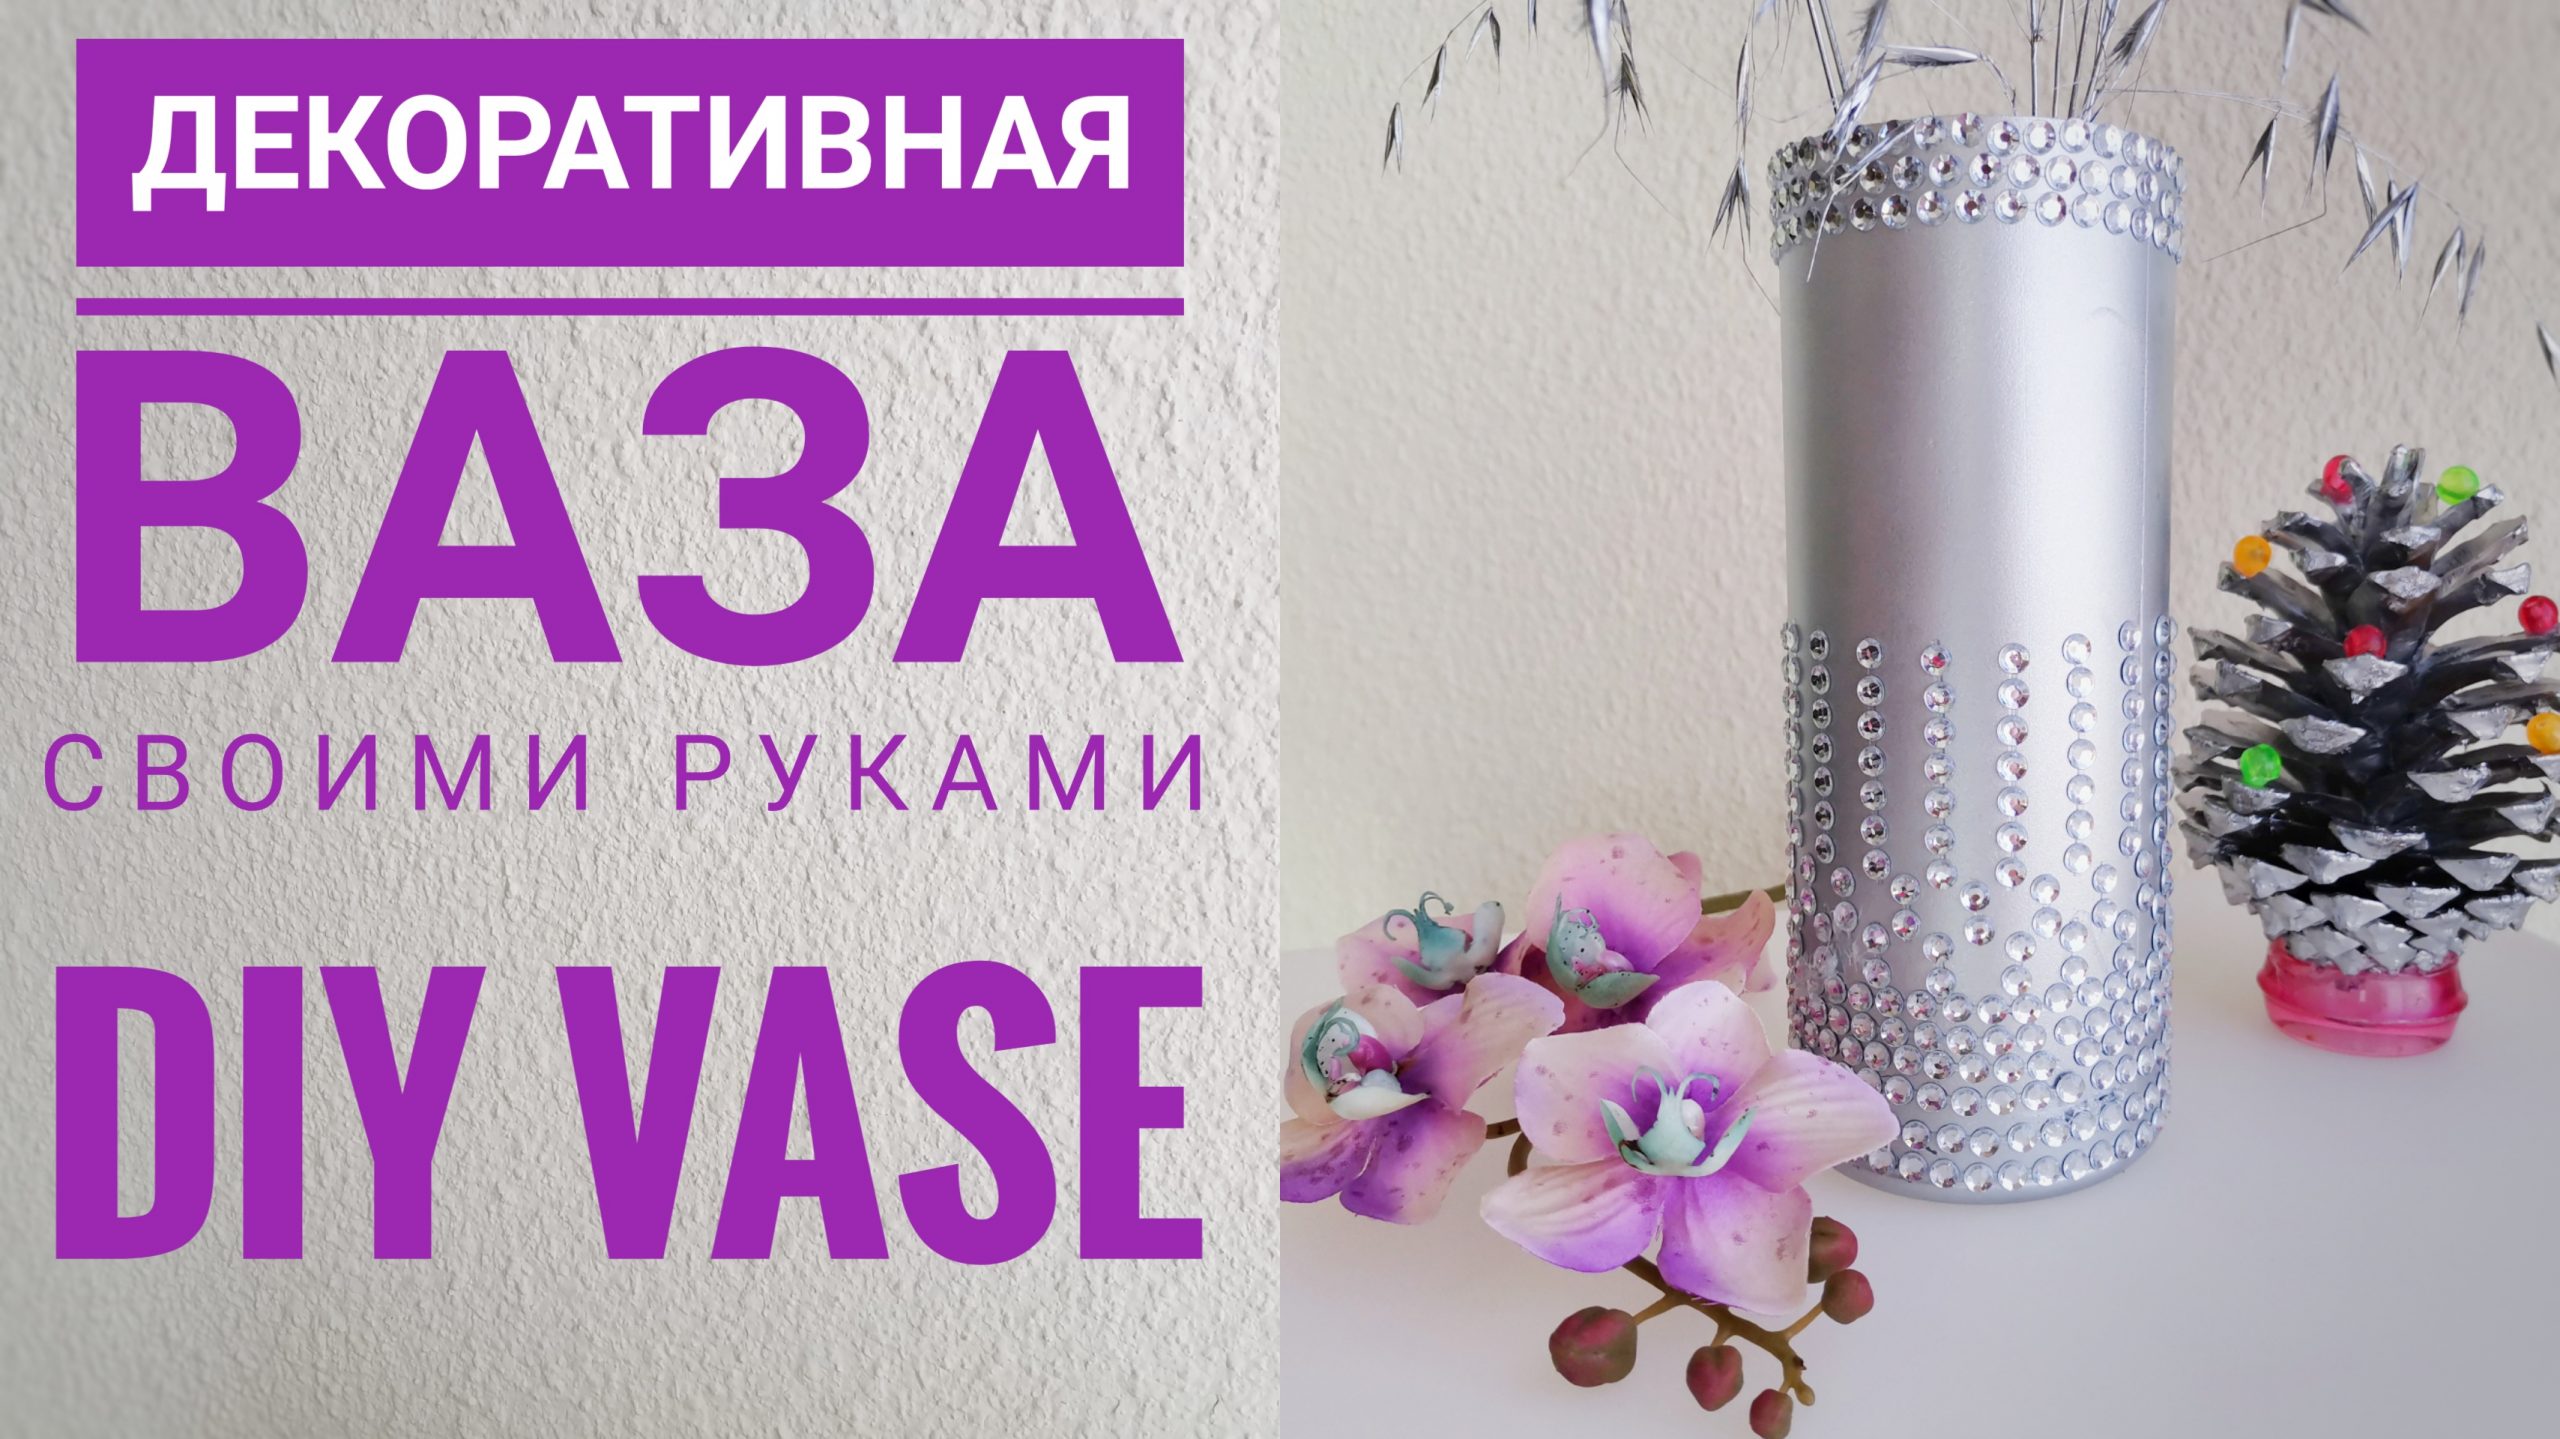 Декоративная Ваза Своими Руками / DIY Vase